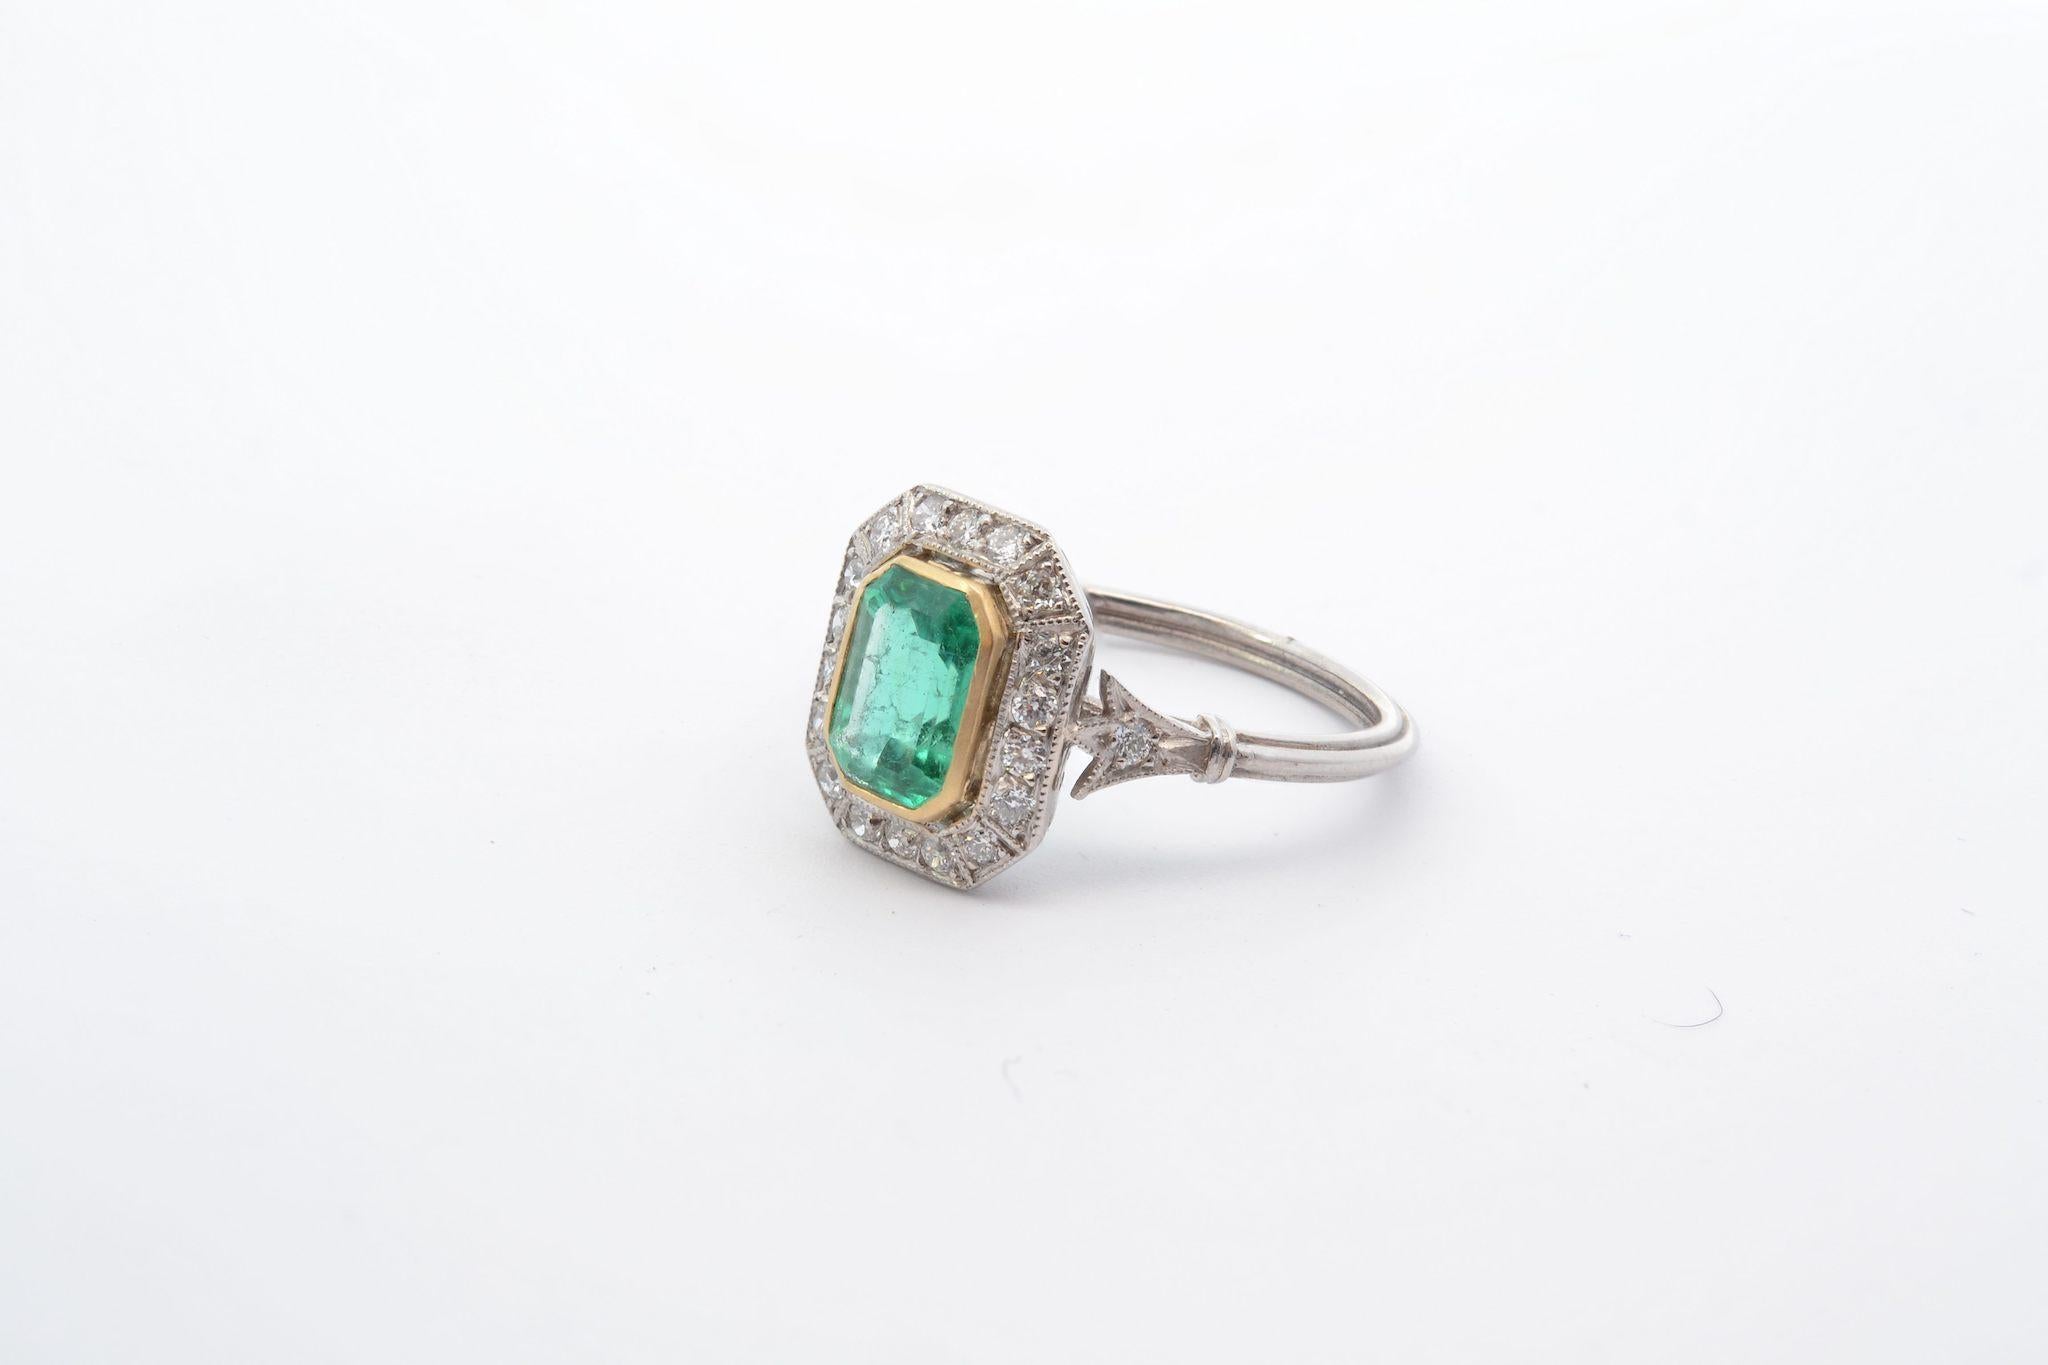 Emerald Cut 1 carat emerald and diamonds ring For Sale